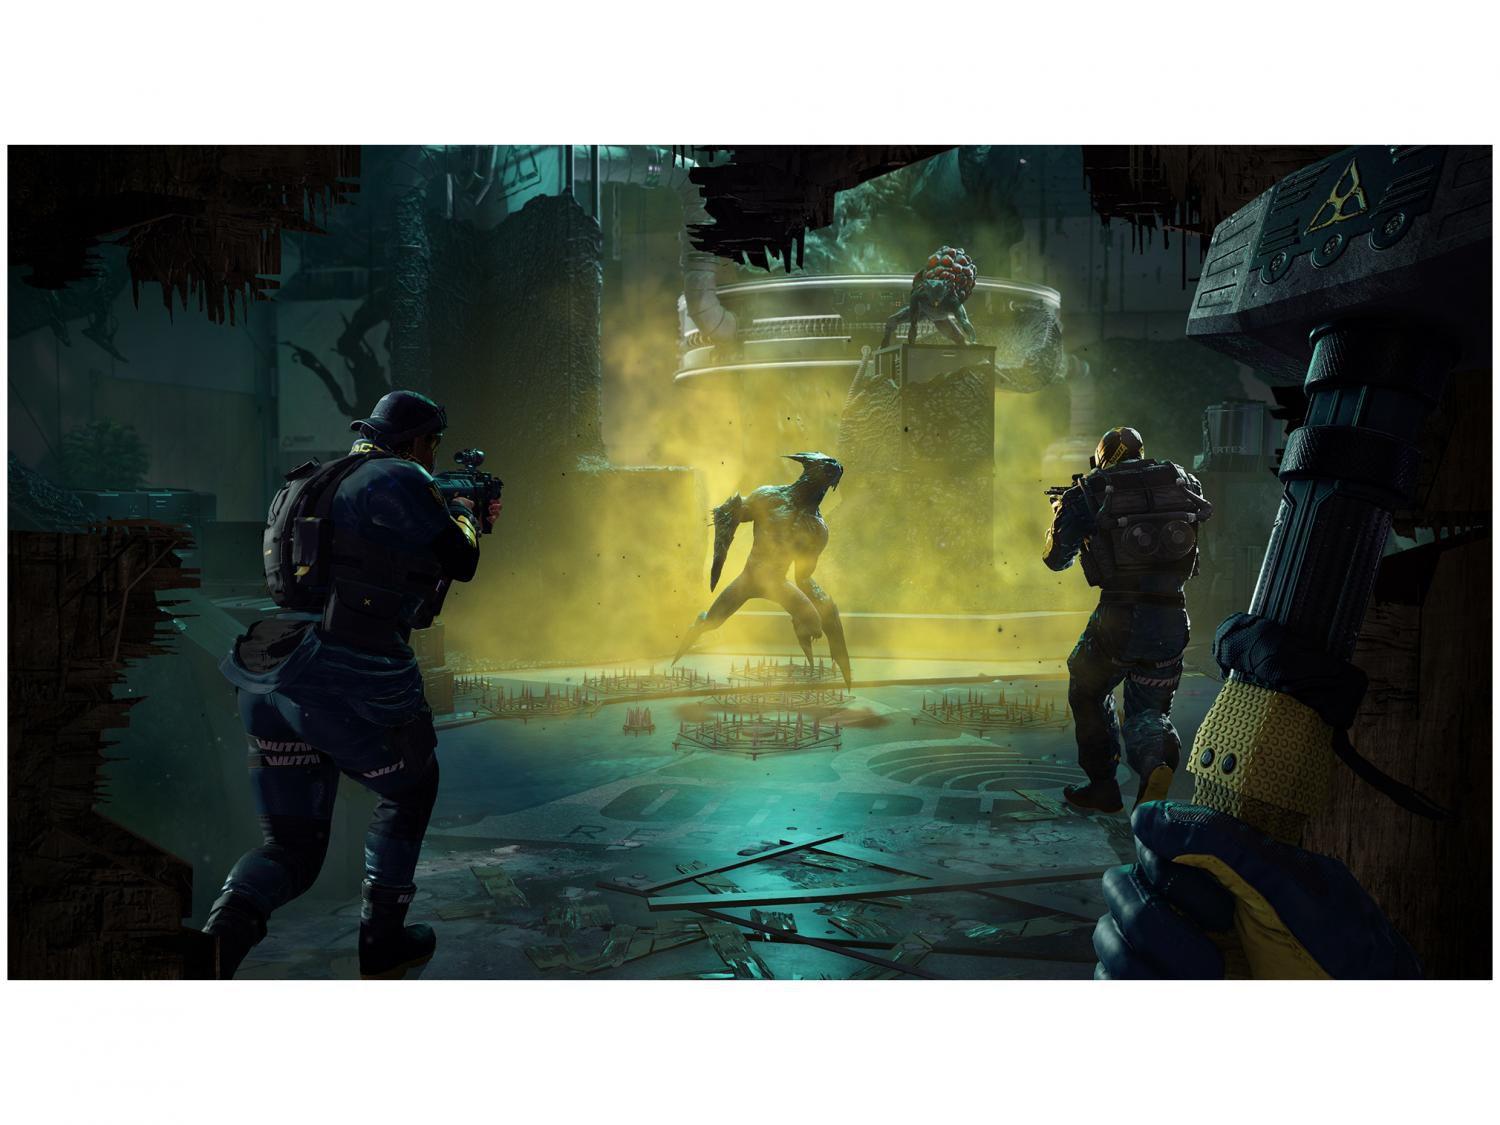 Tom Clancys Rainbow Six Extraction para PS5 - Ubisoft, Shopping